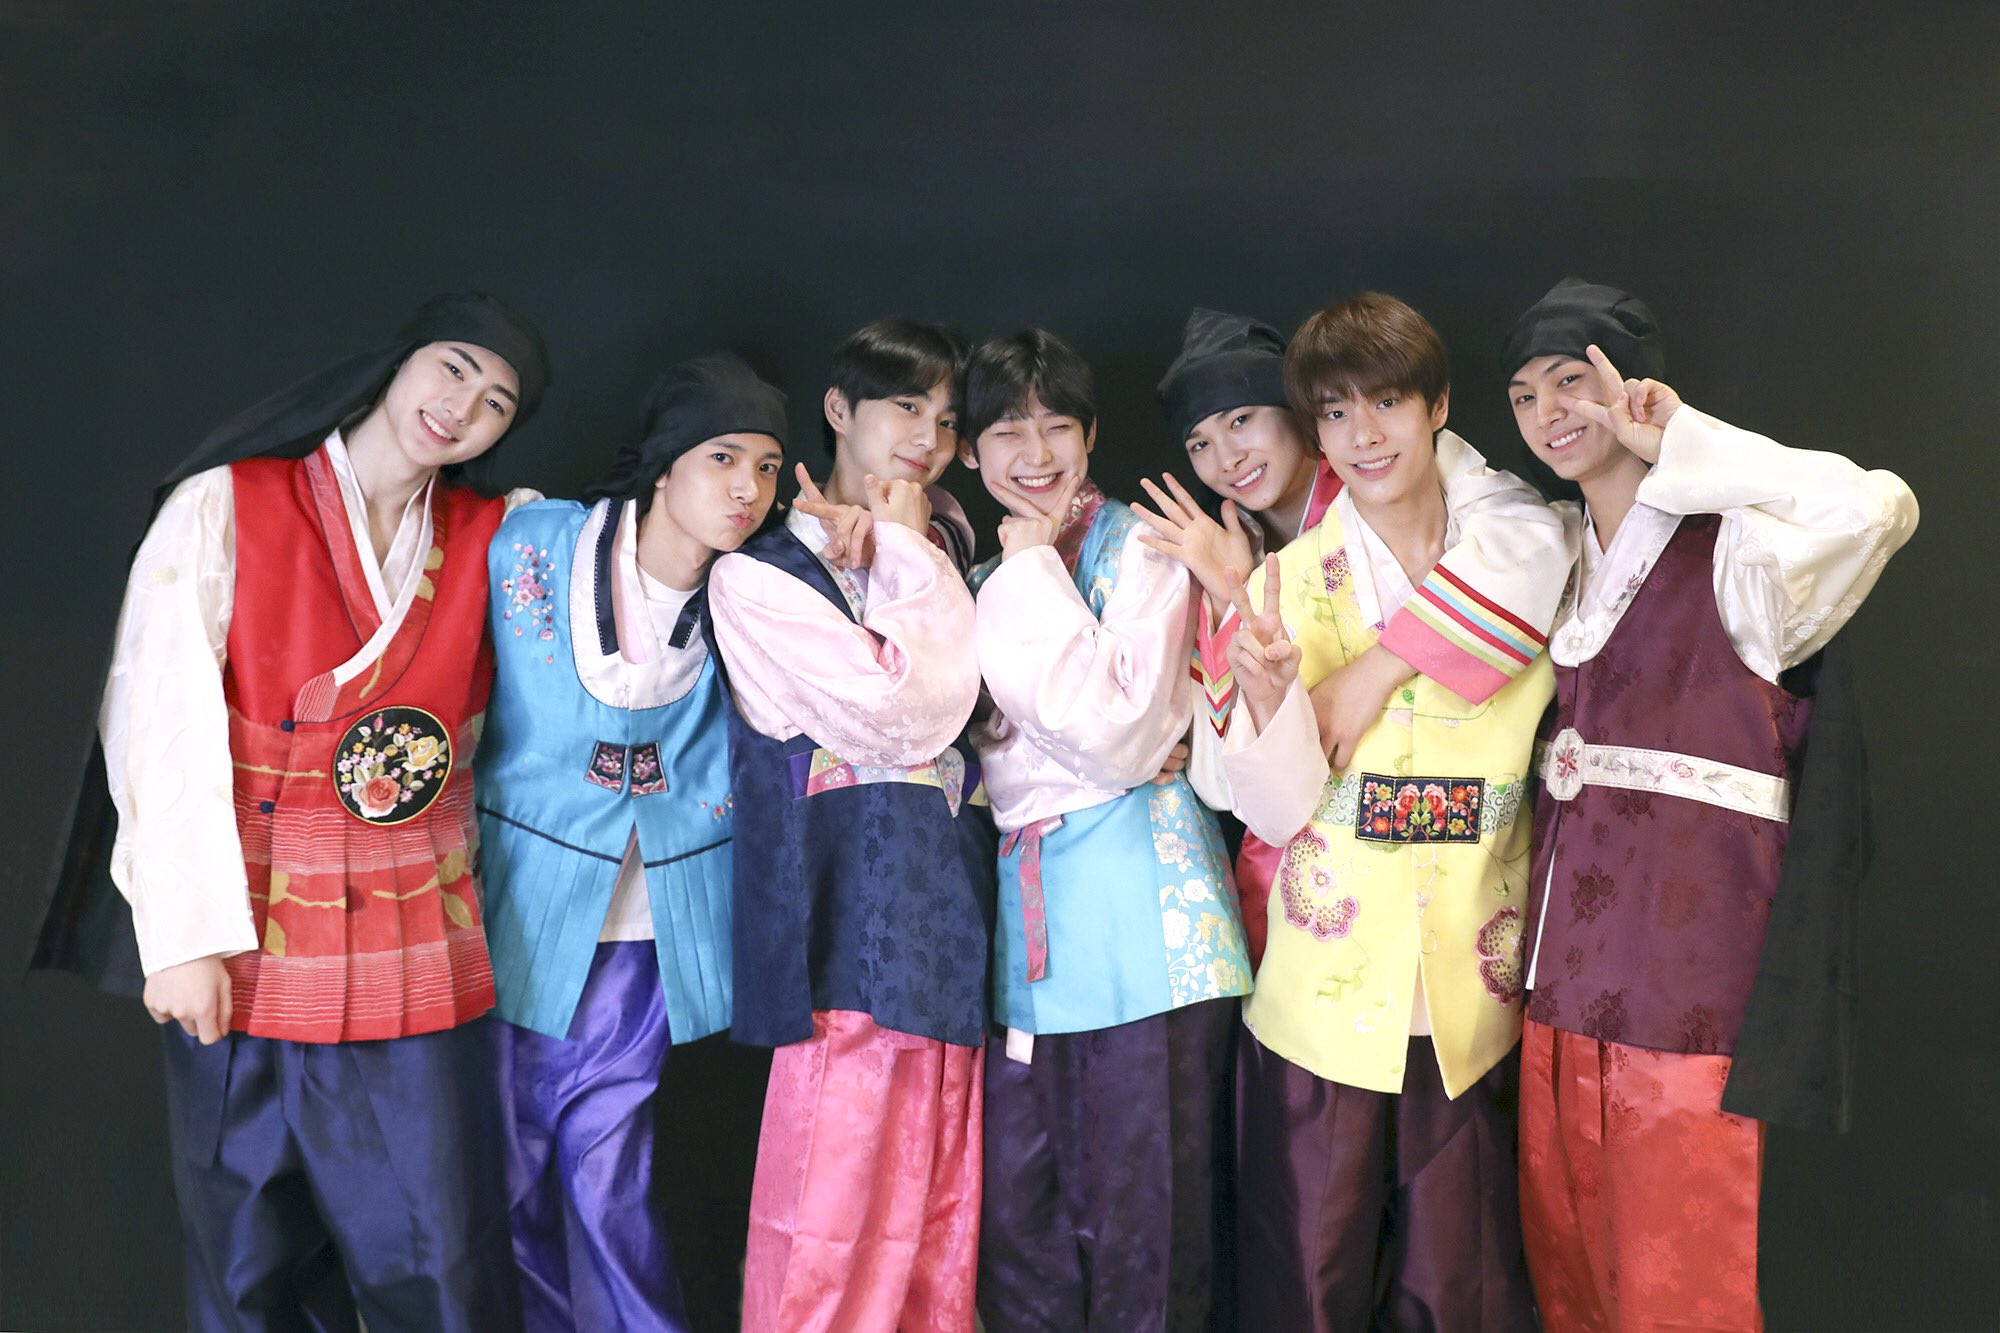 happy-chuseok-a-photo-collection-of-k-pop-idols-celebrating-korean-big-holiday-4